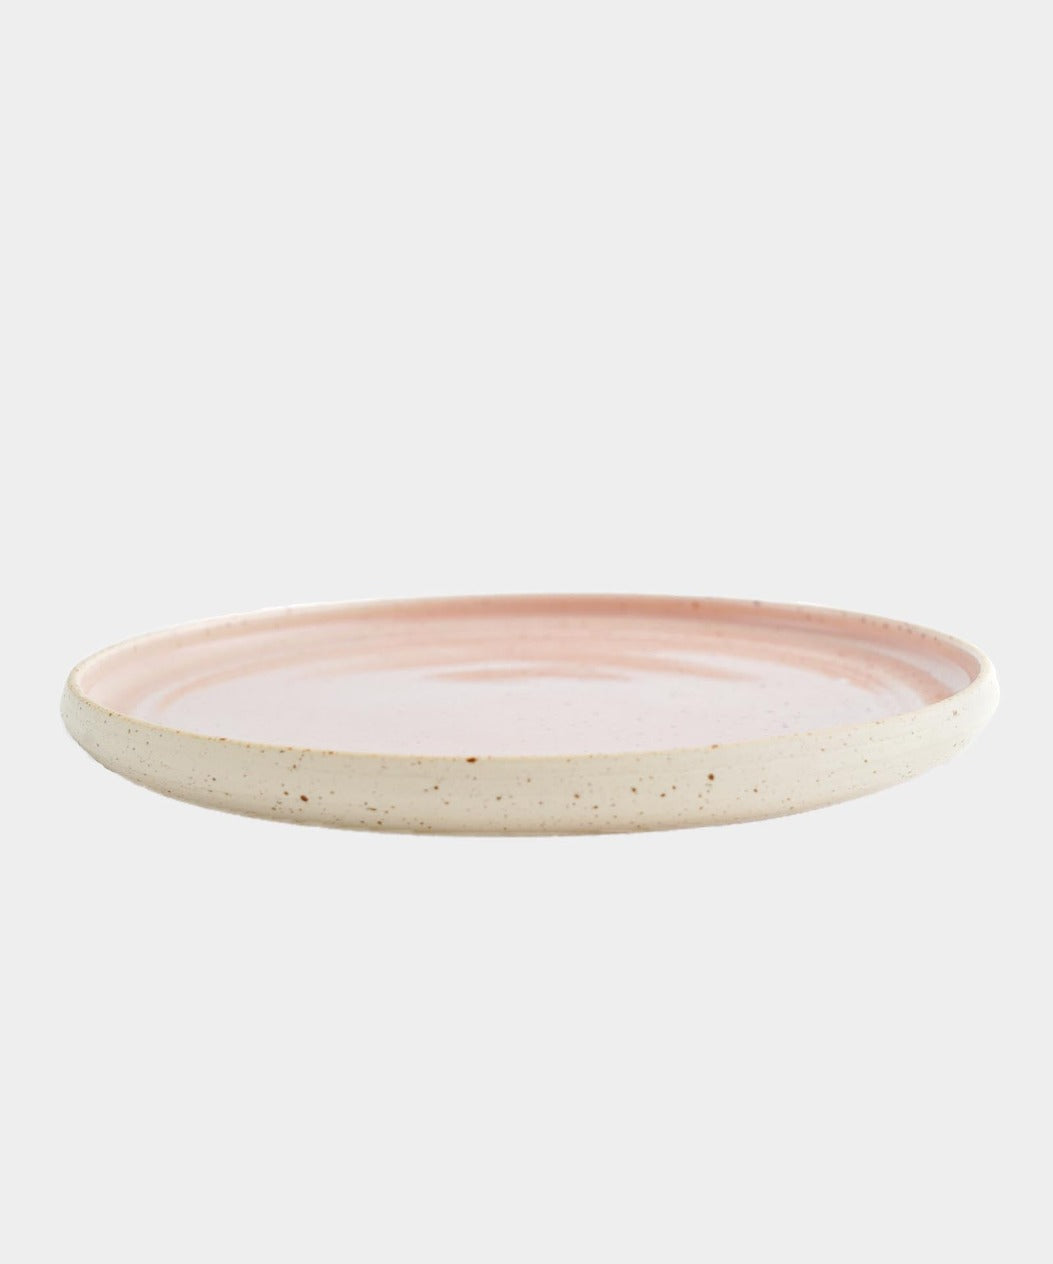 Håndlavet Keramik middagstallerken | FLORAL by Vang | Kerama 1